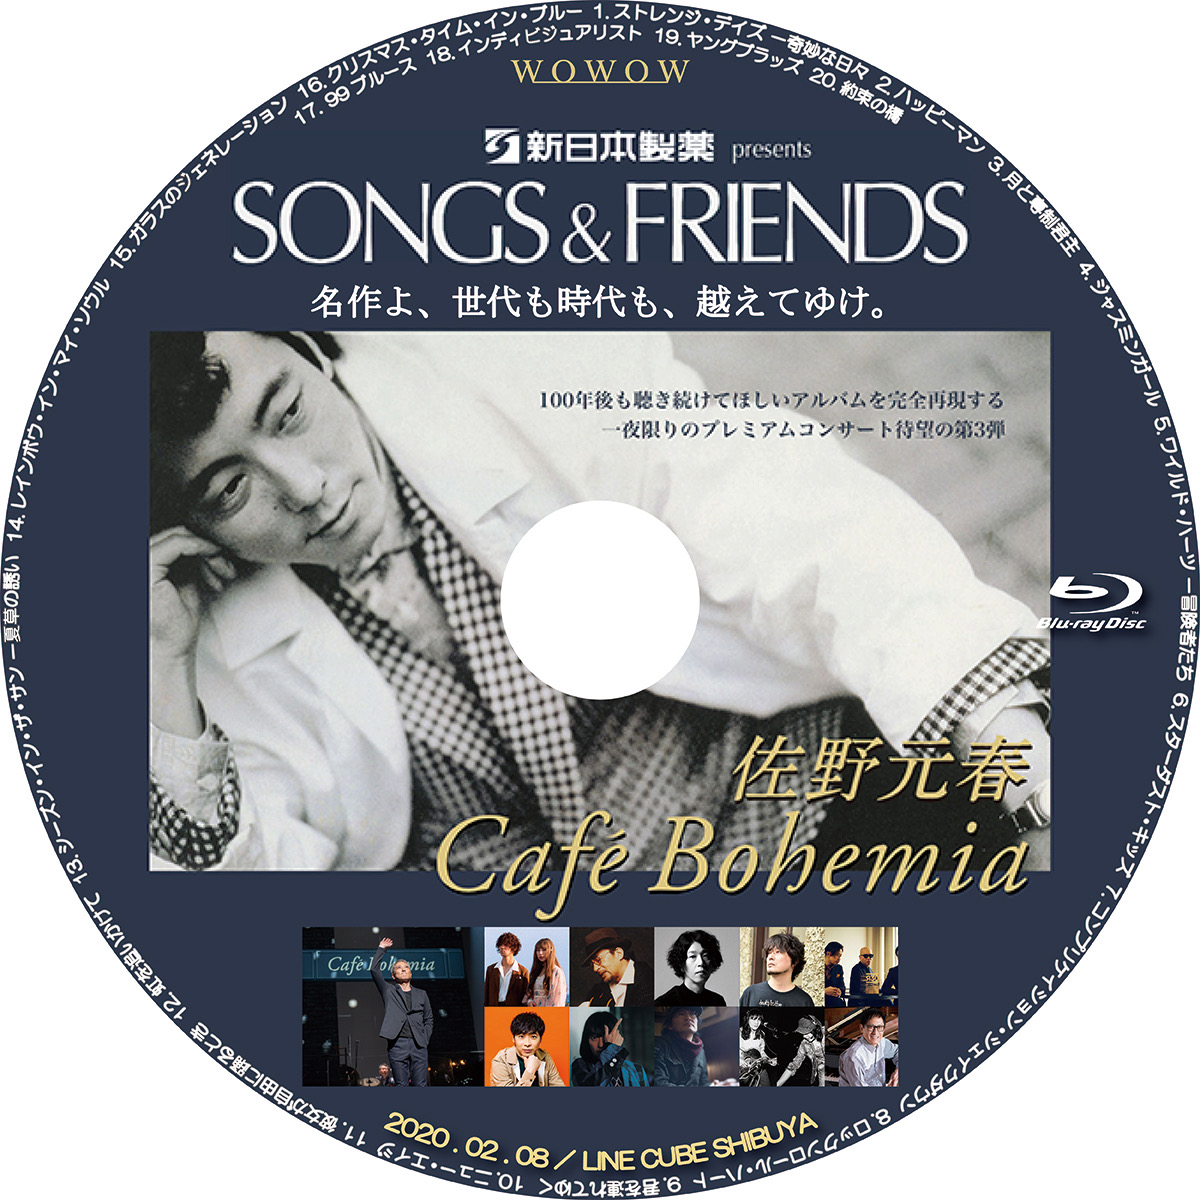 新日本製薬 presents SONGS & FRIENDS 佐野元春「Cafe Bohemia」WOWOW